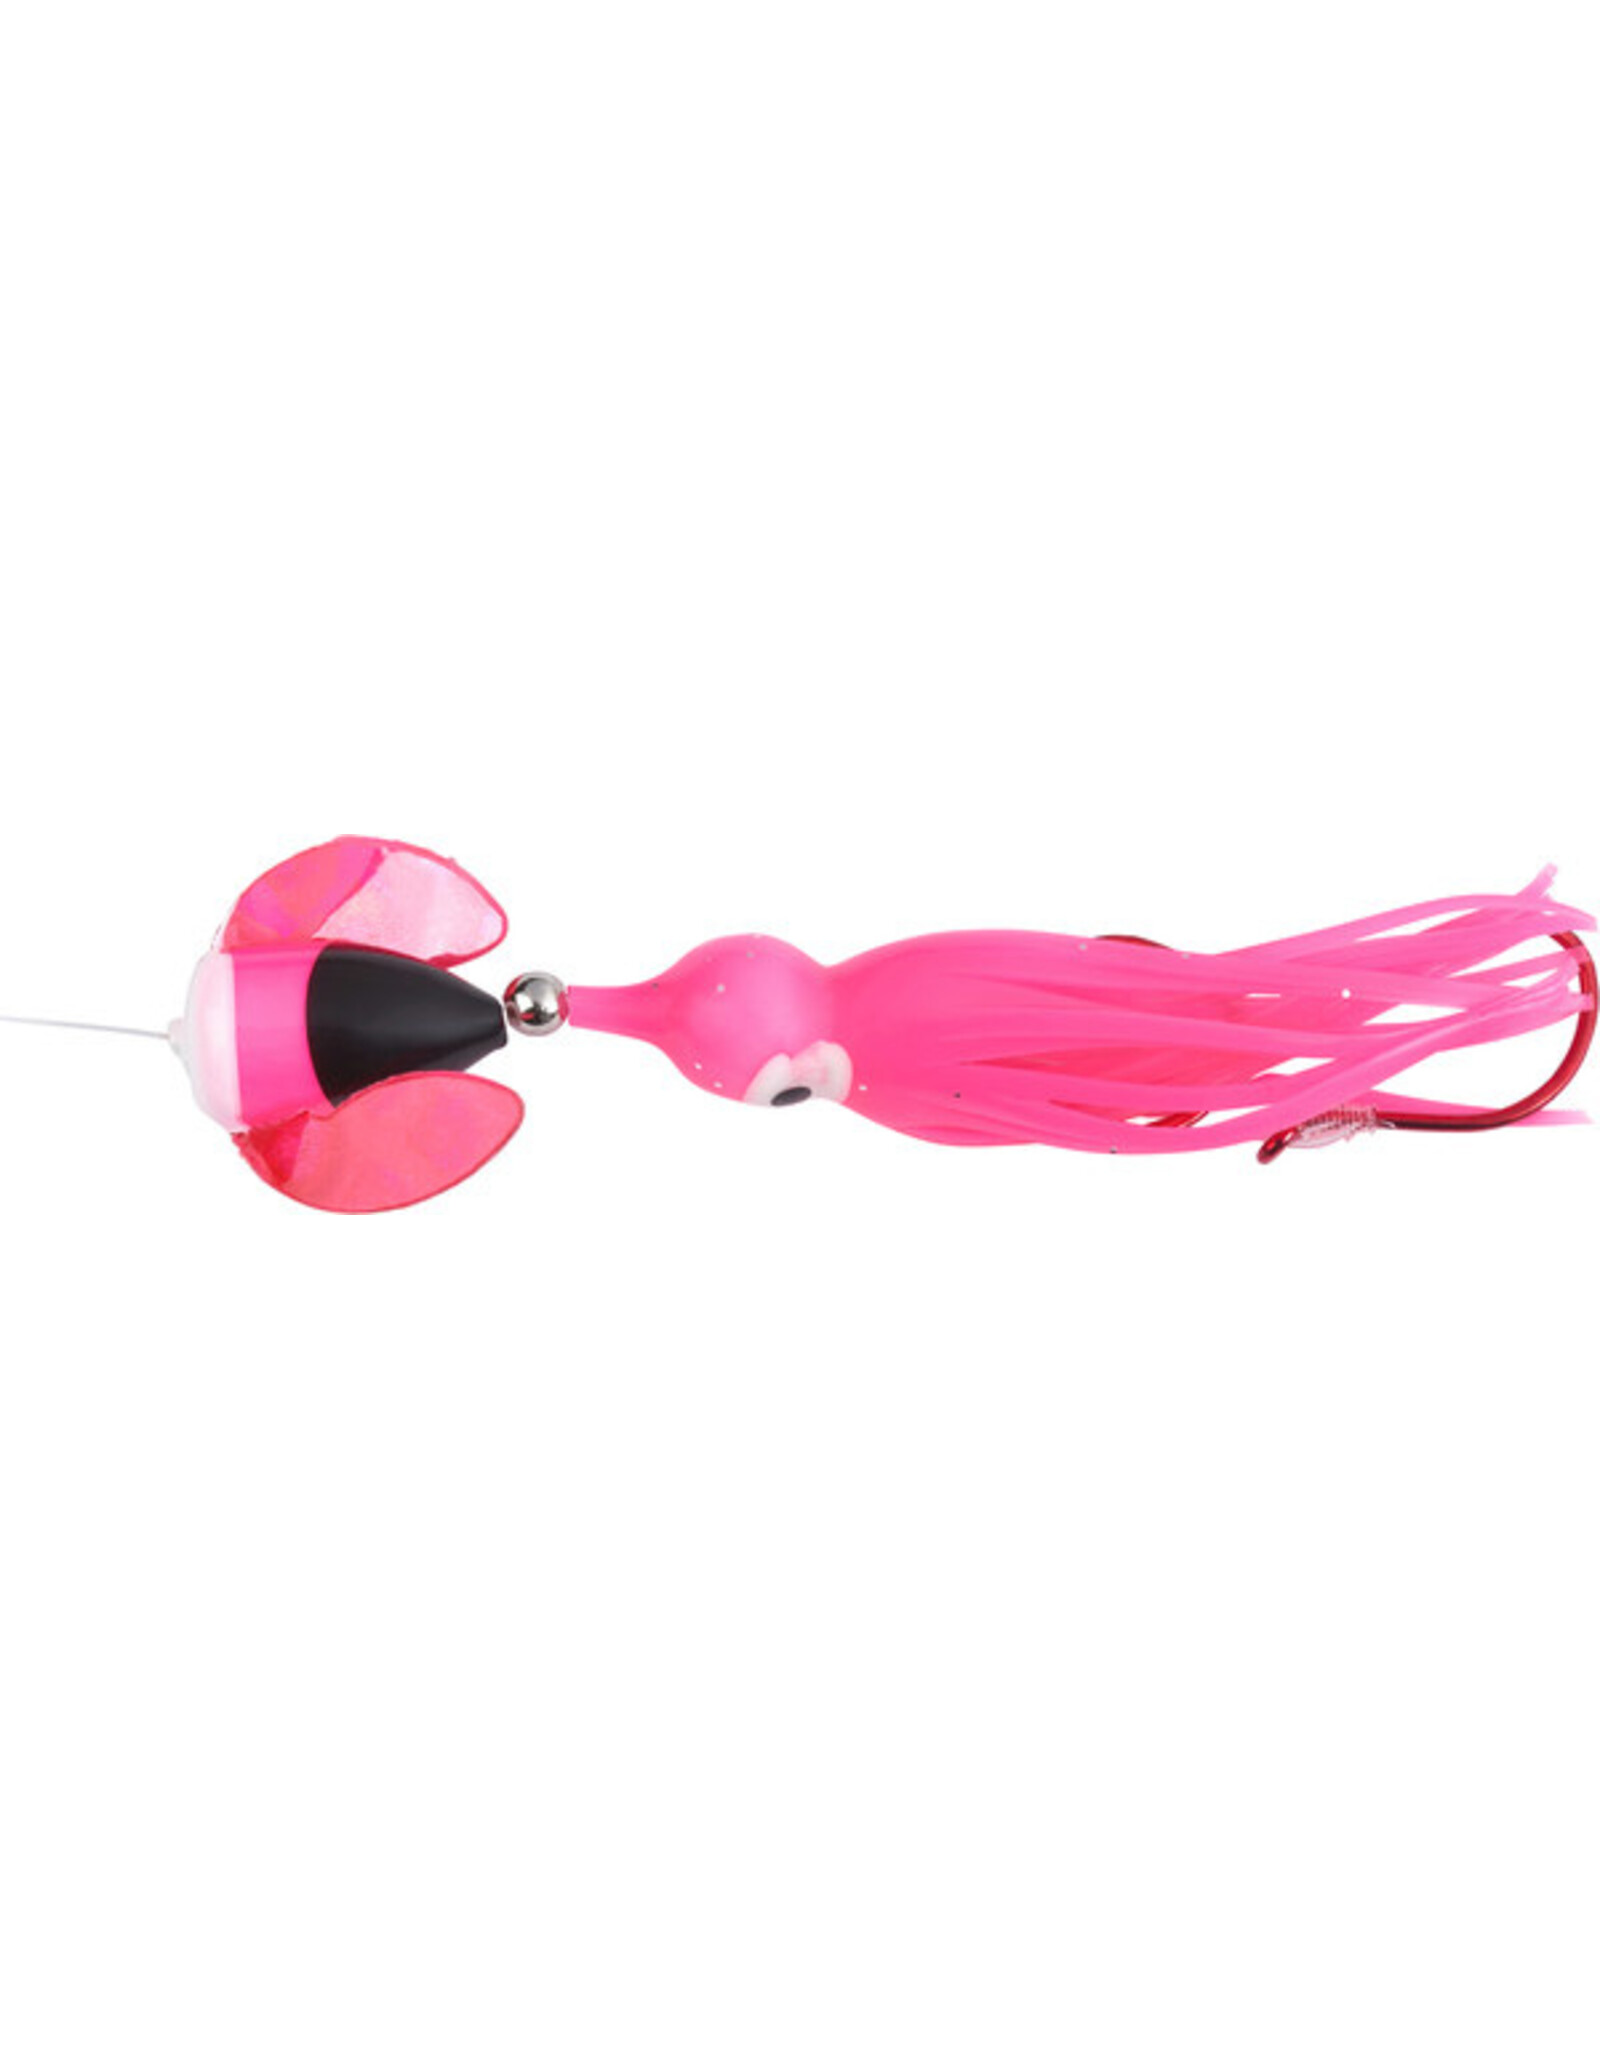 Worden's Spin-N-Glo Kokanee Rig - Size 10 - Nightmare Pink